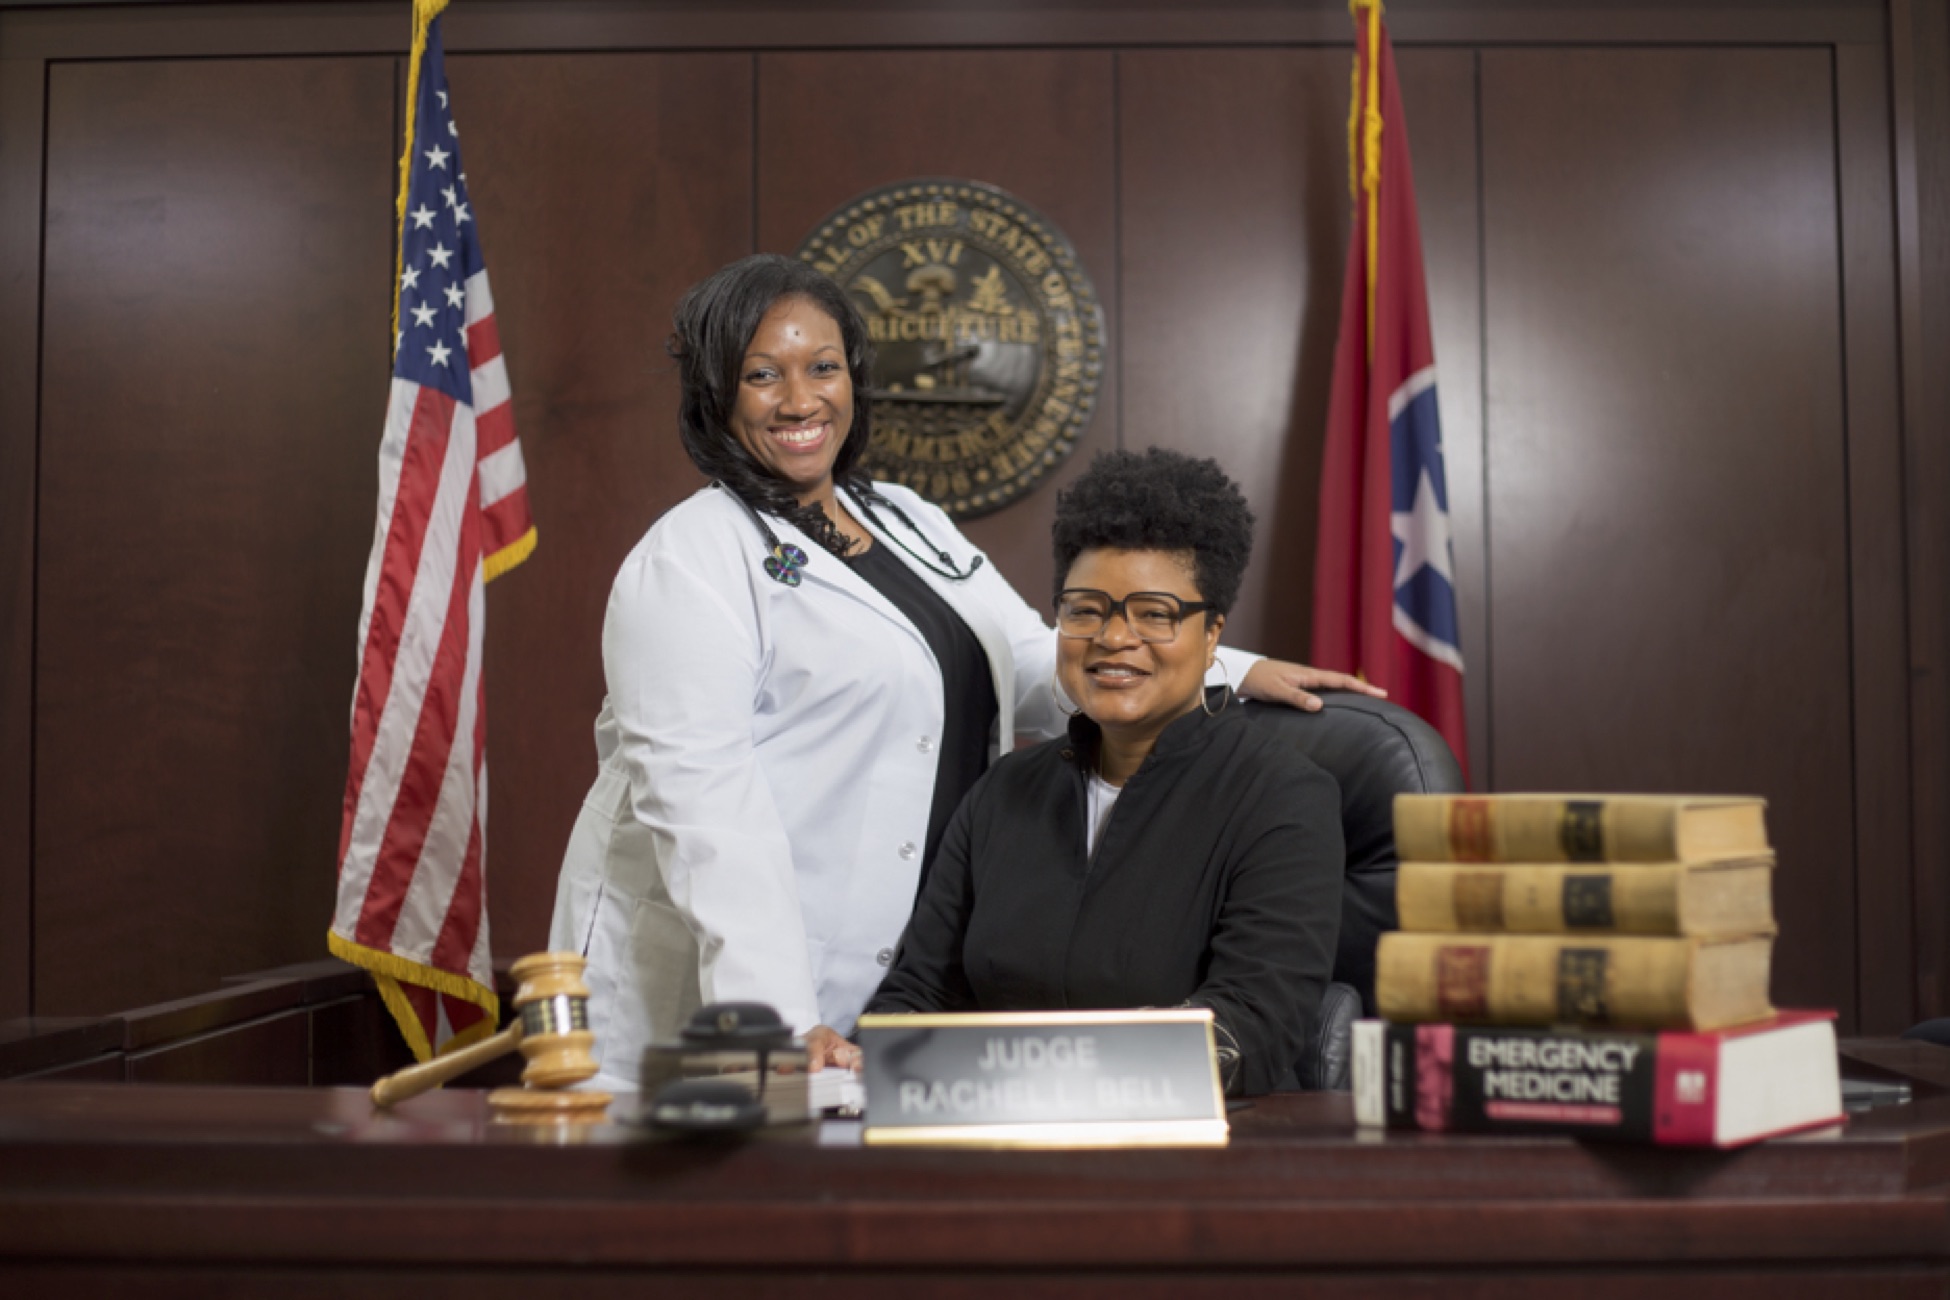 Dr. Dorsha James and Judge Rachel Bell